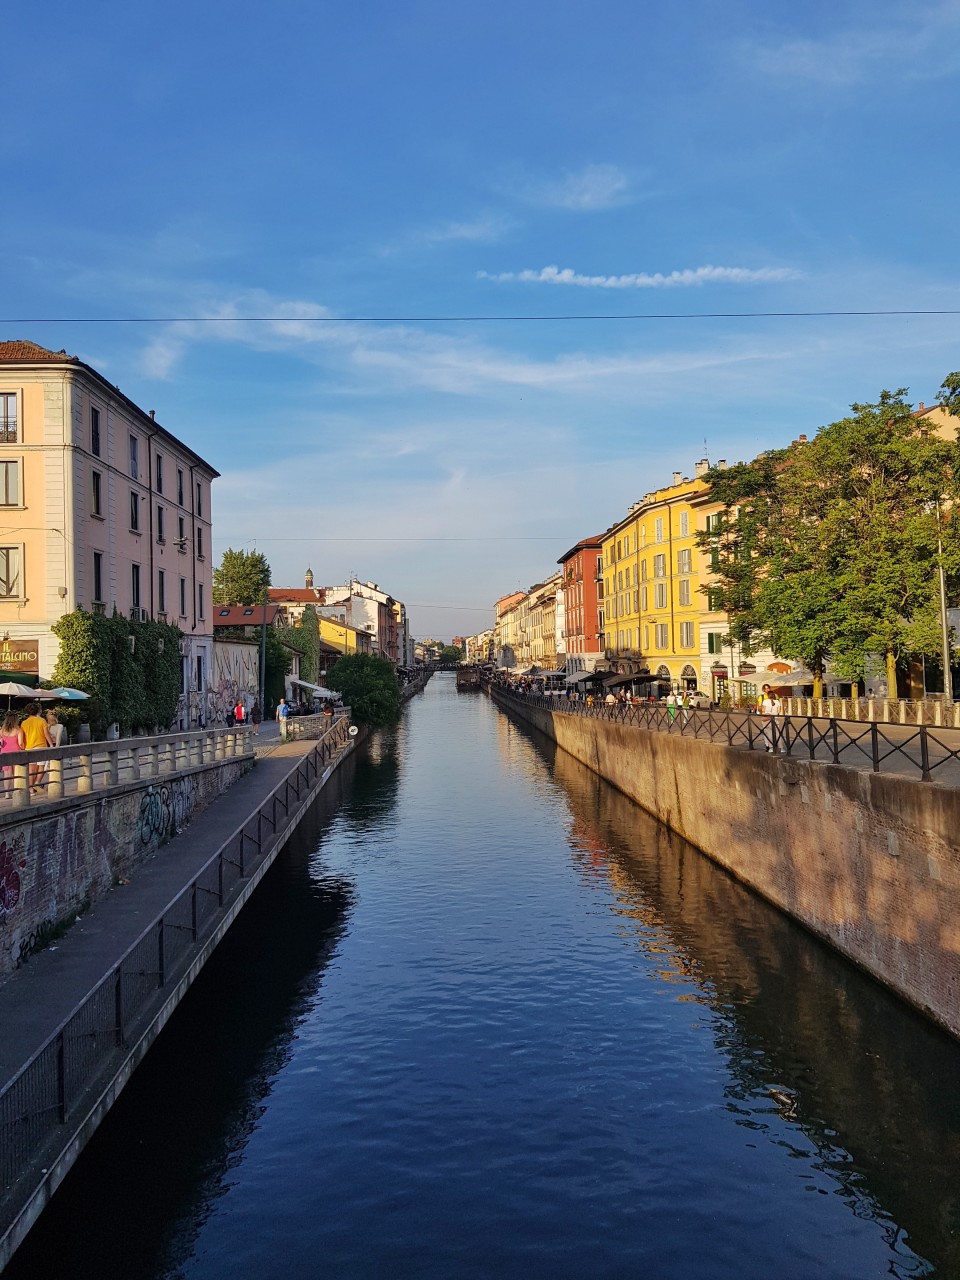 City break in Milano - canalul Navigli - foodieopedia.ro